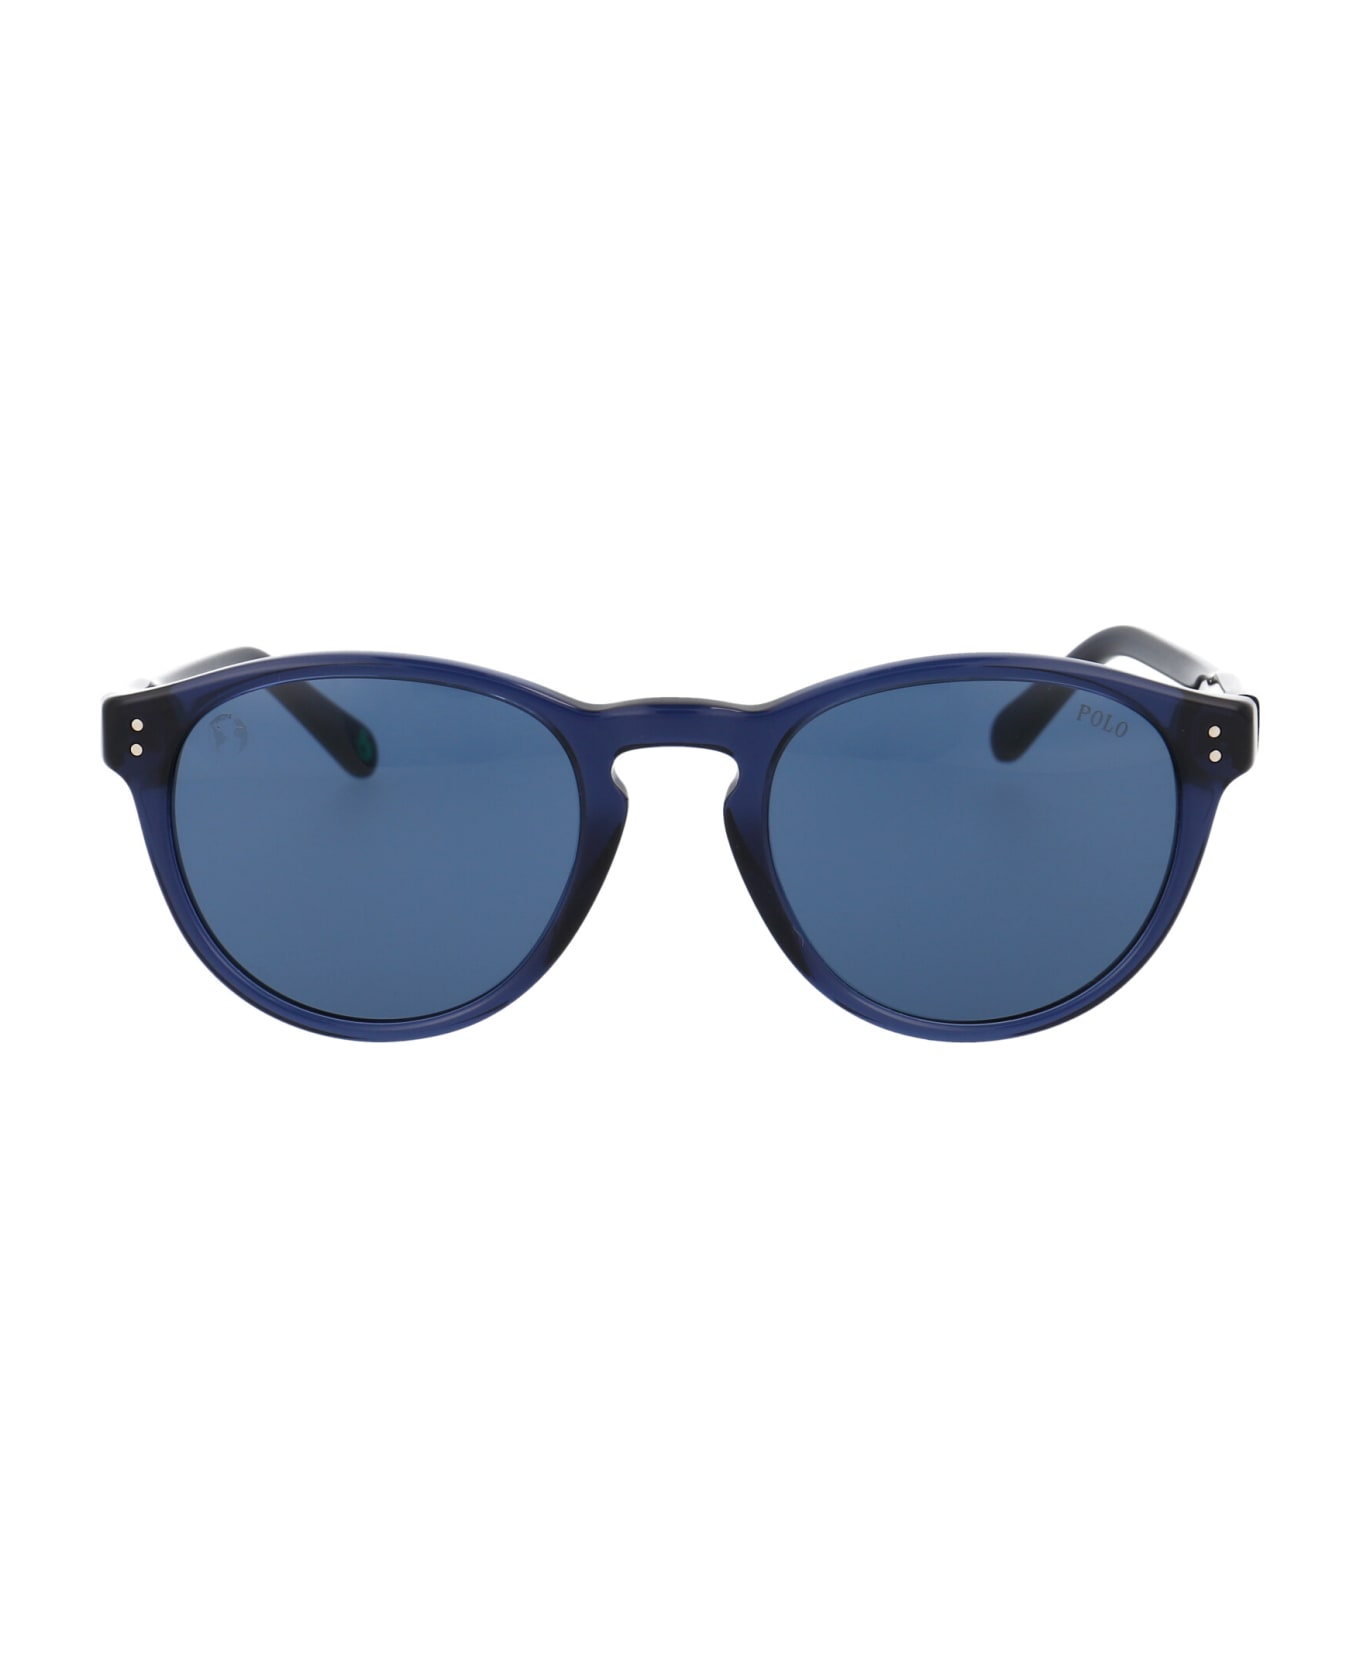 Polo Ralph Lauren 0ph4172 Sunglasses - 595580 SHINY TRANSPARENT BLUE サングラス